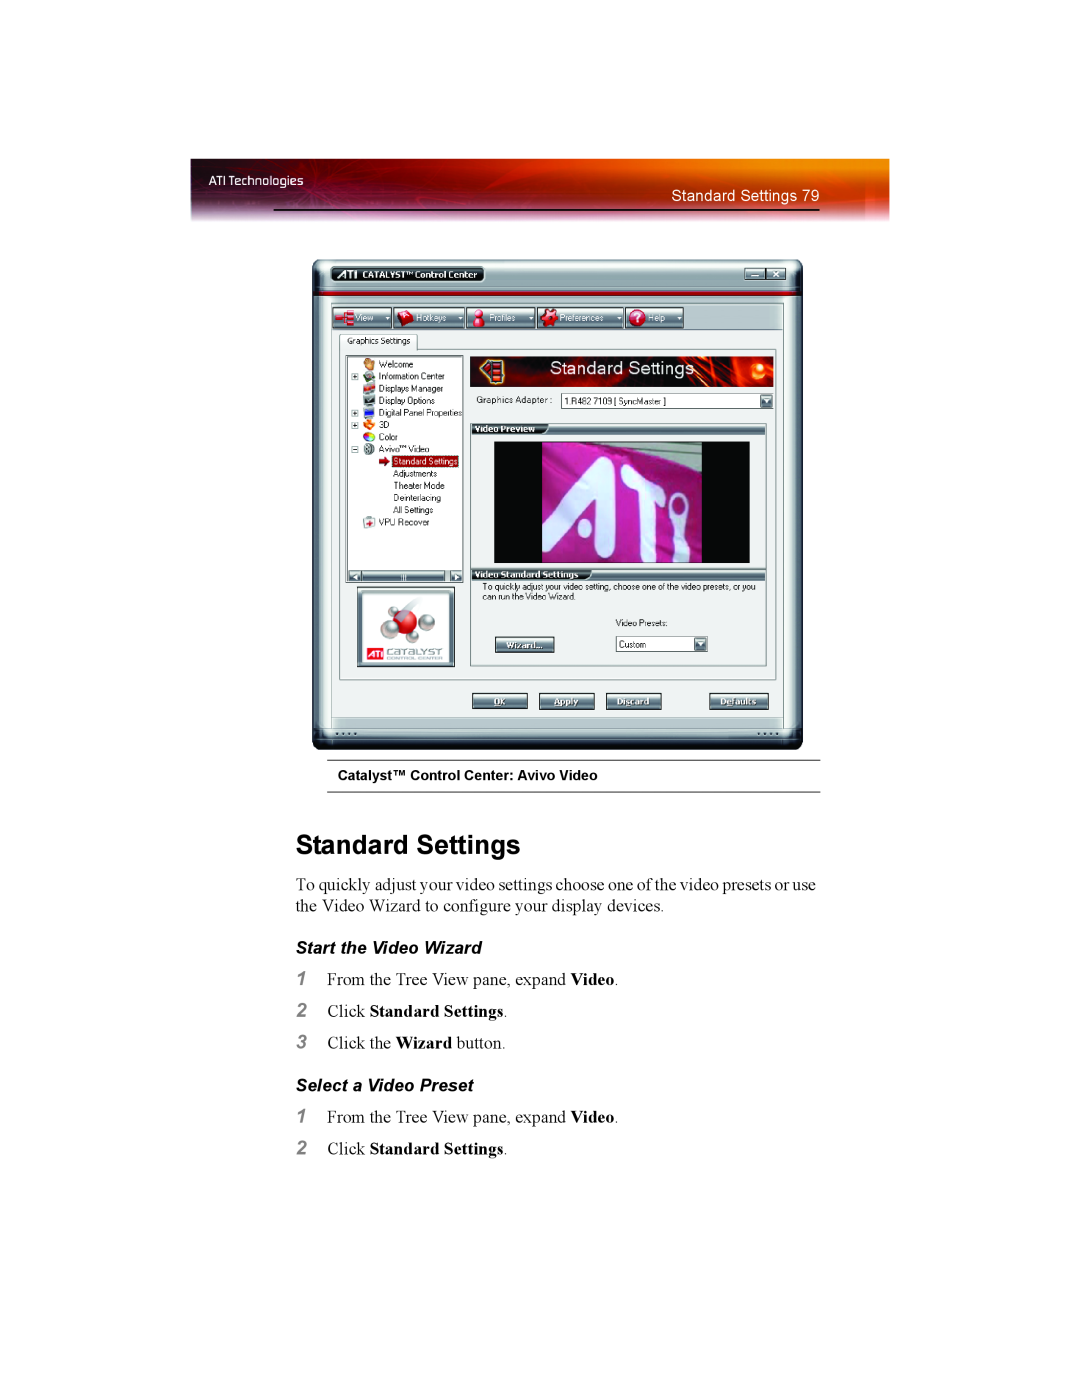 ATI Technologies X1550 SERIES manual Start the Video Wizard, Click Standard Settings, Select a Video Preset 